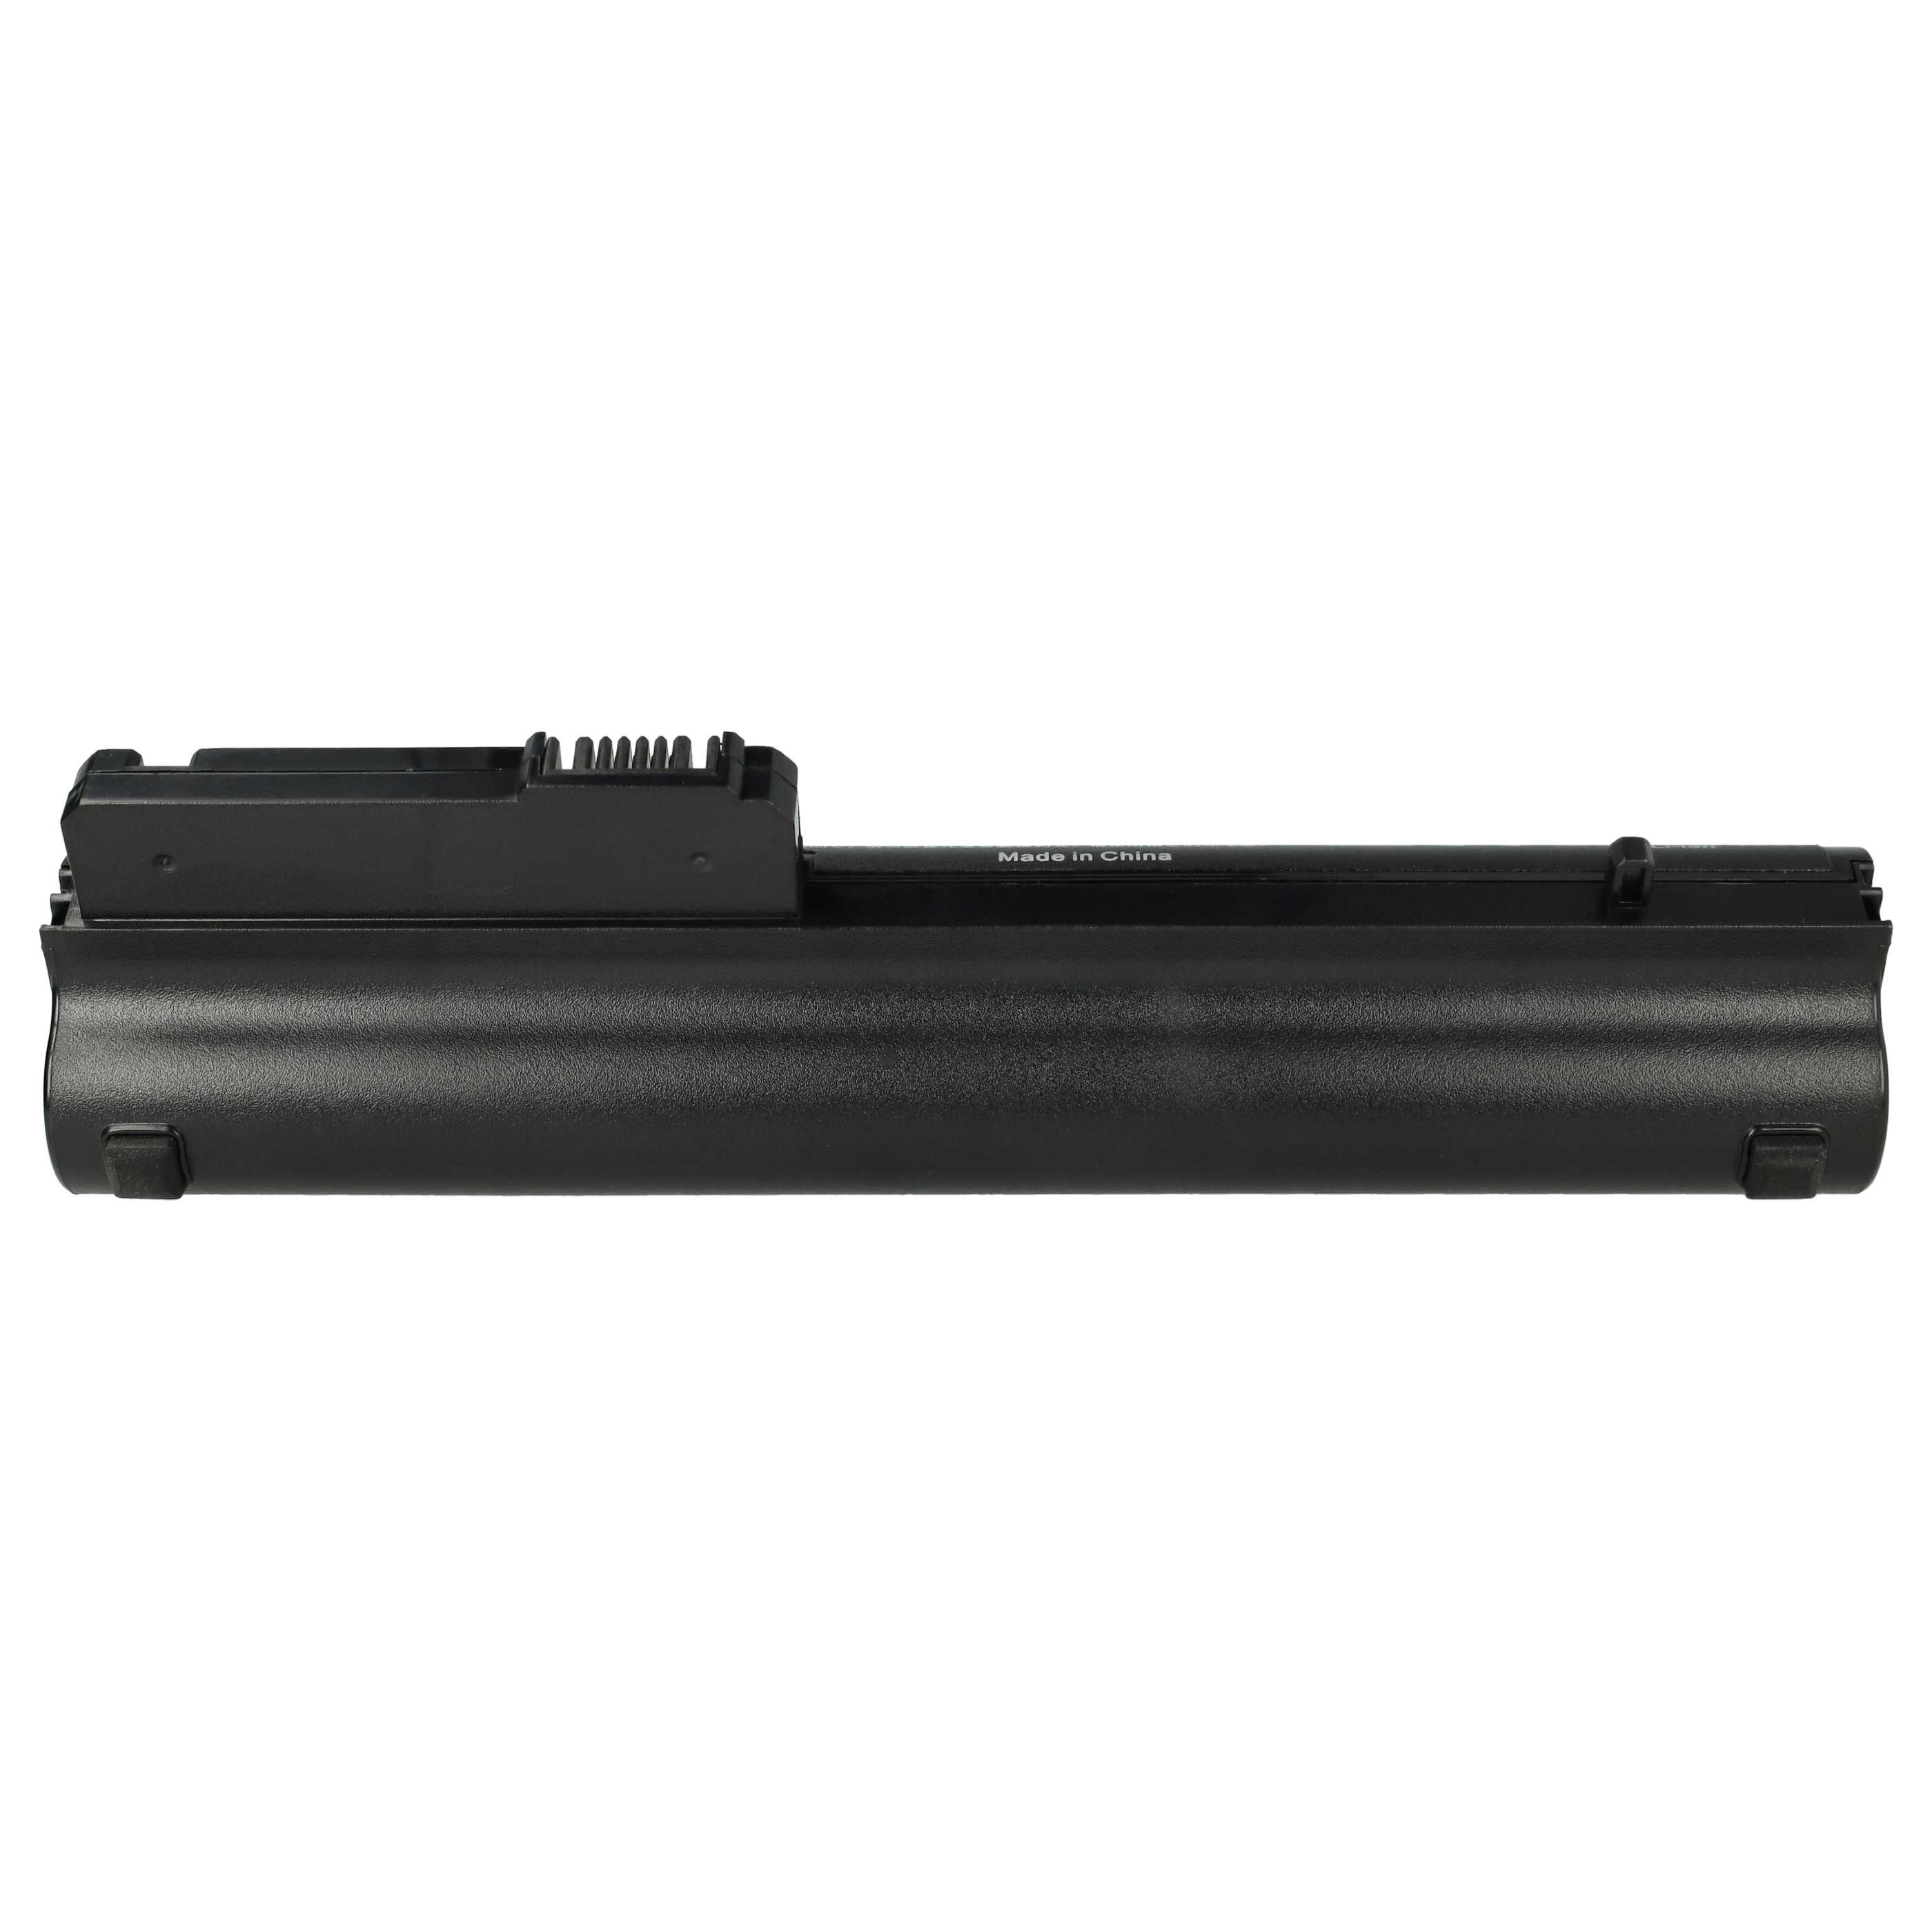 Akumulator do laptopa zamiennik HP 404887-241, 411126-001, 404888-241 - 6600 mAh 10,8 V Li-Ion, czarny